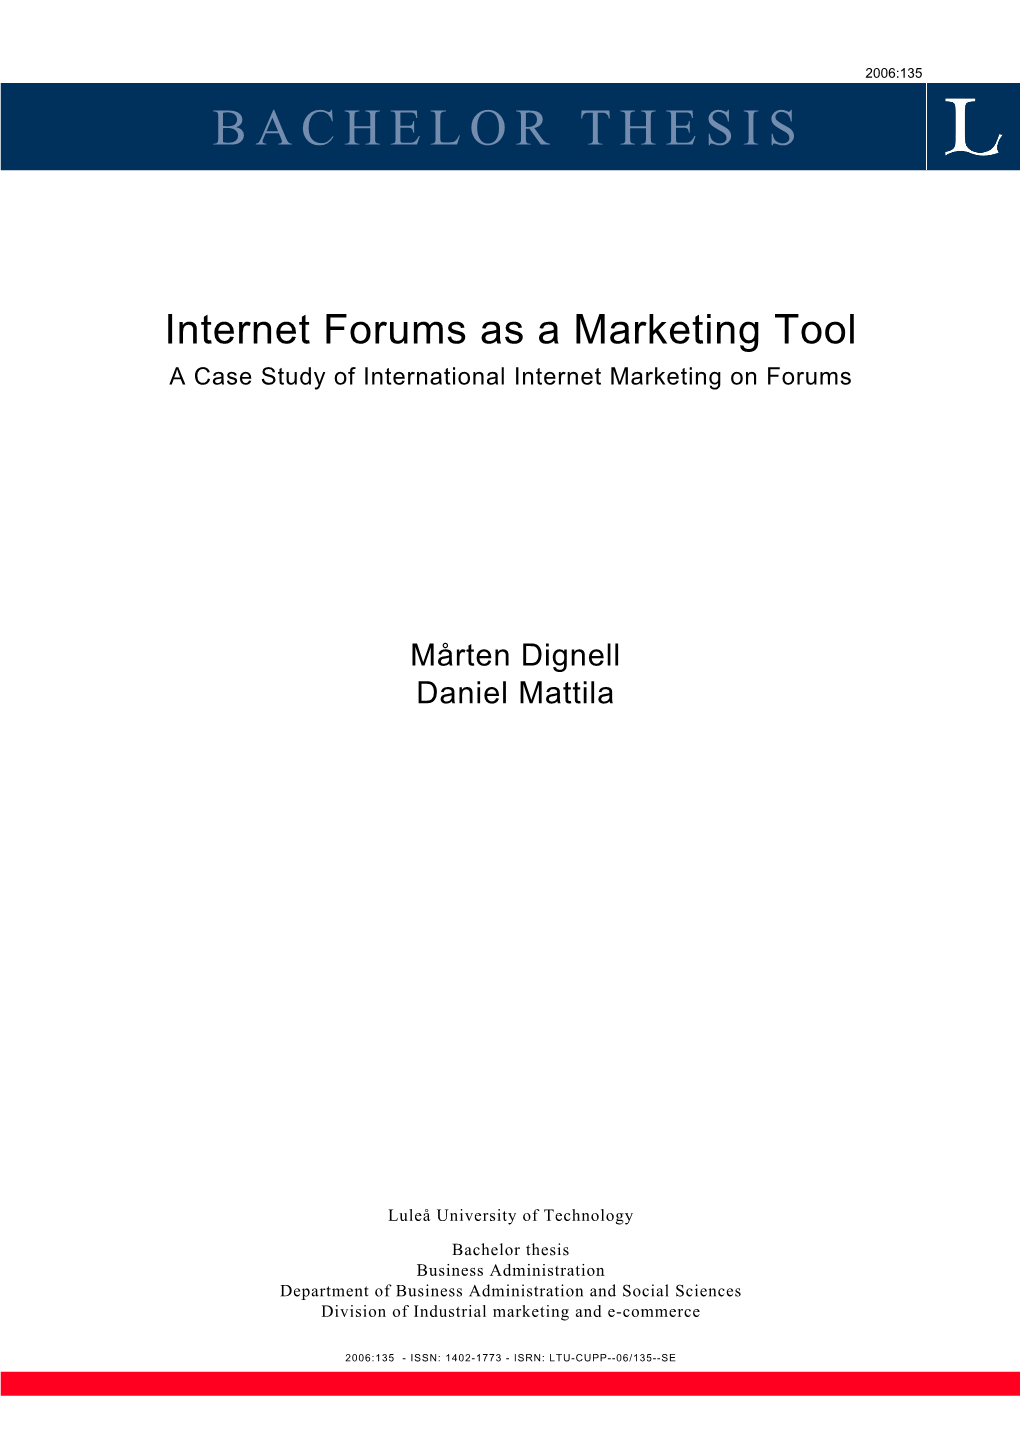 Internet Forums As a Marketing Tool a Case Study of International Internet Marketing on Forums